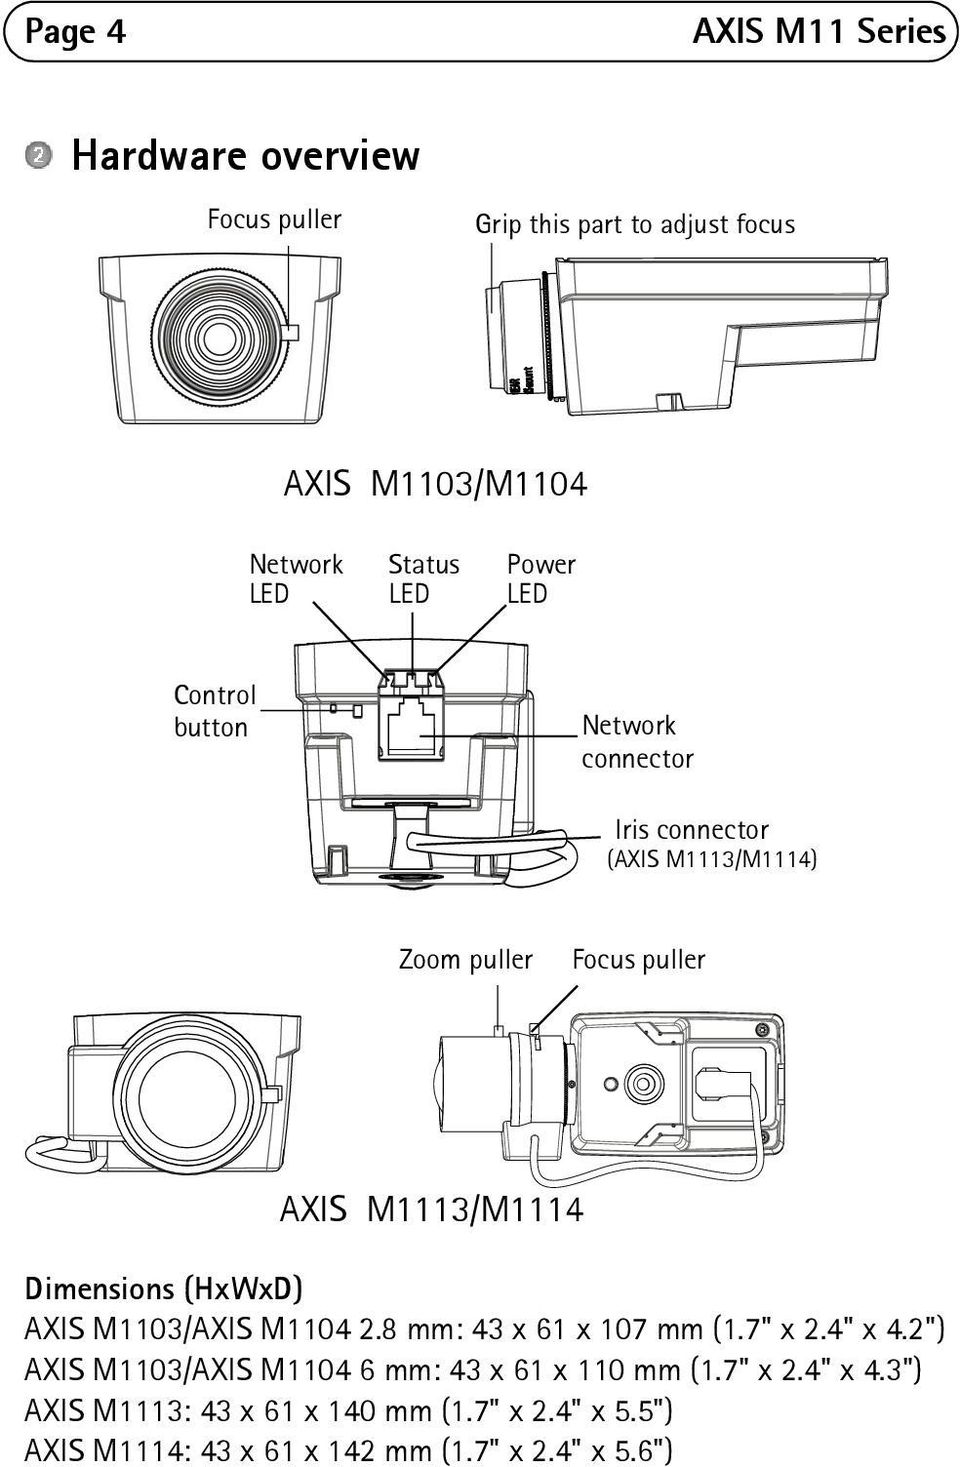 Dimensions (HxWxD) AXIS M1103/AXIS M1104 2.8 mm: 43 x 61 x 107 mm (1.7" x 2.4" x 4.